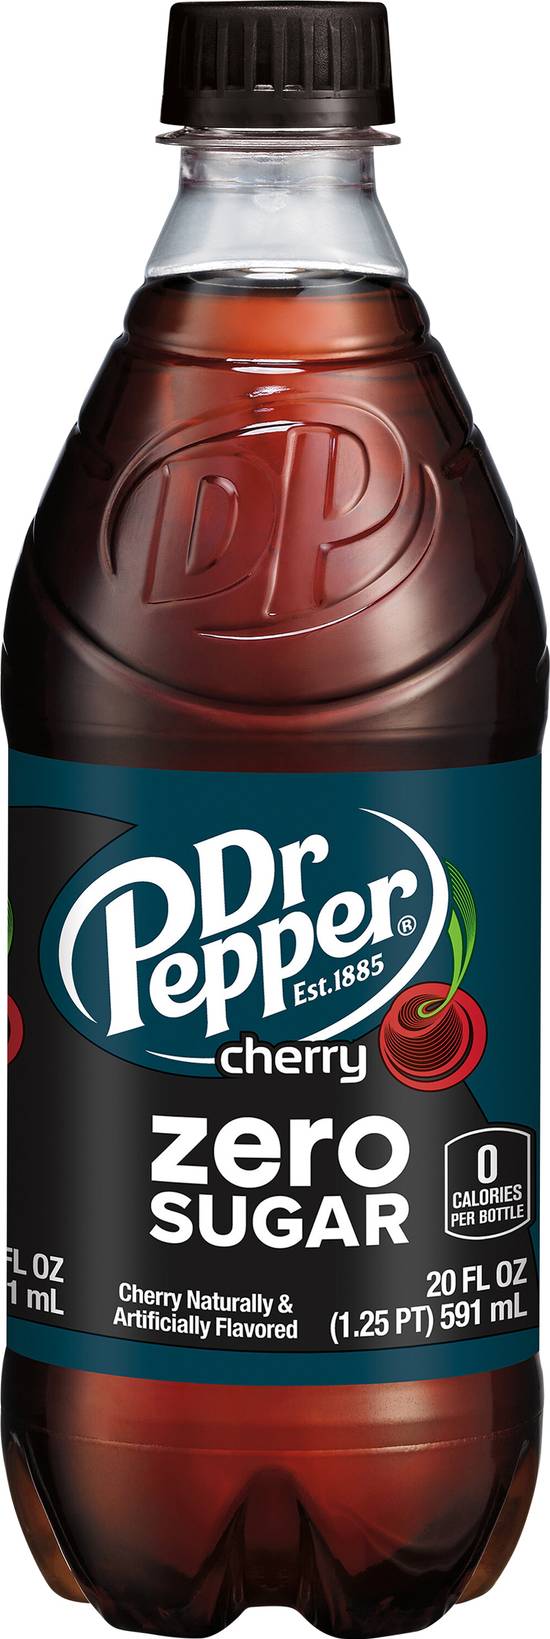 Dr Pepper Zero Sugar Soda (20 fl oz) (cherry)